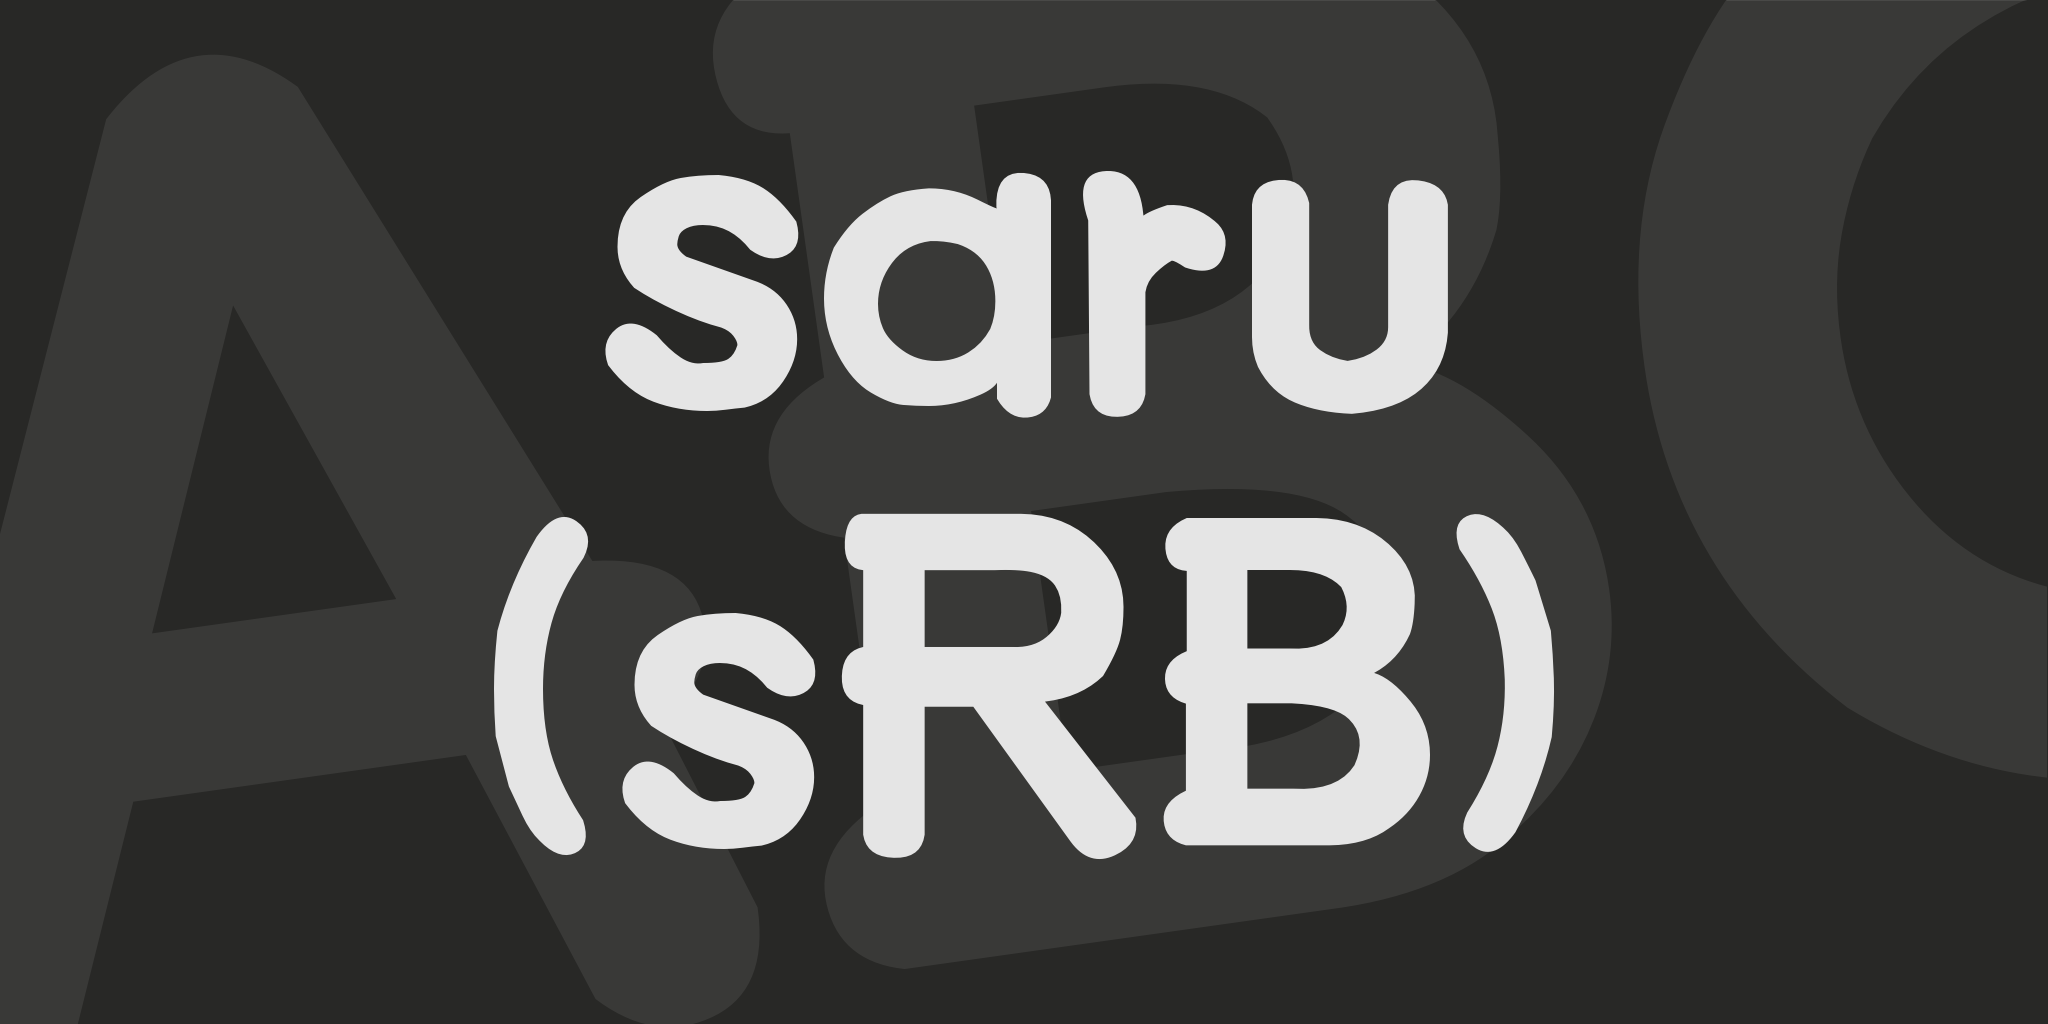 Saru Srb